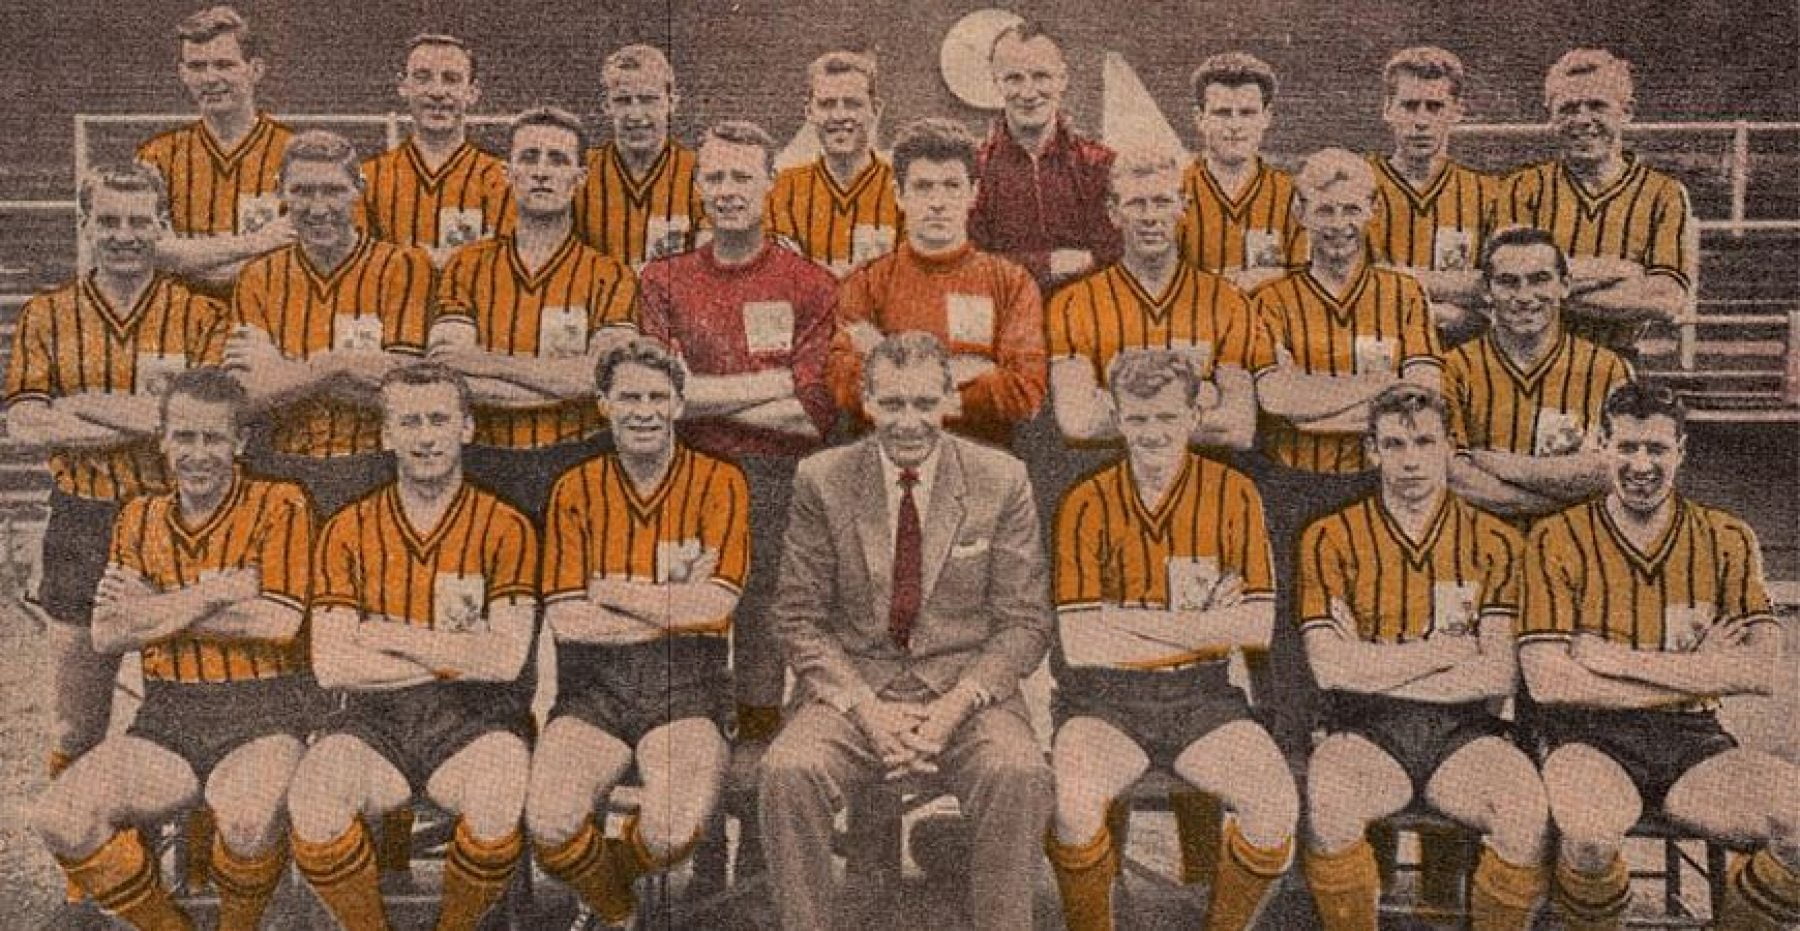 1961 Port Vale team